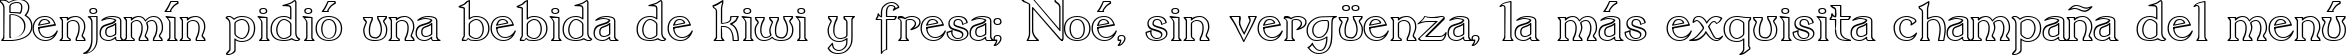 Пример написания шрифтом Dumbledor 3 Outline текста на испанском